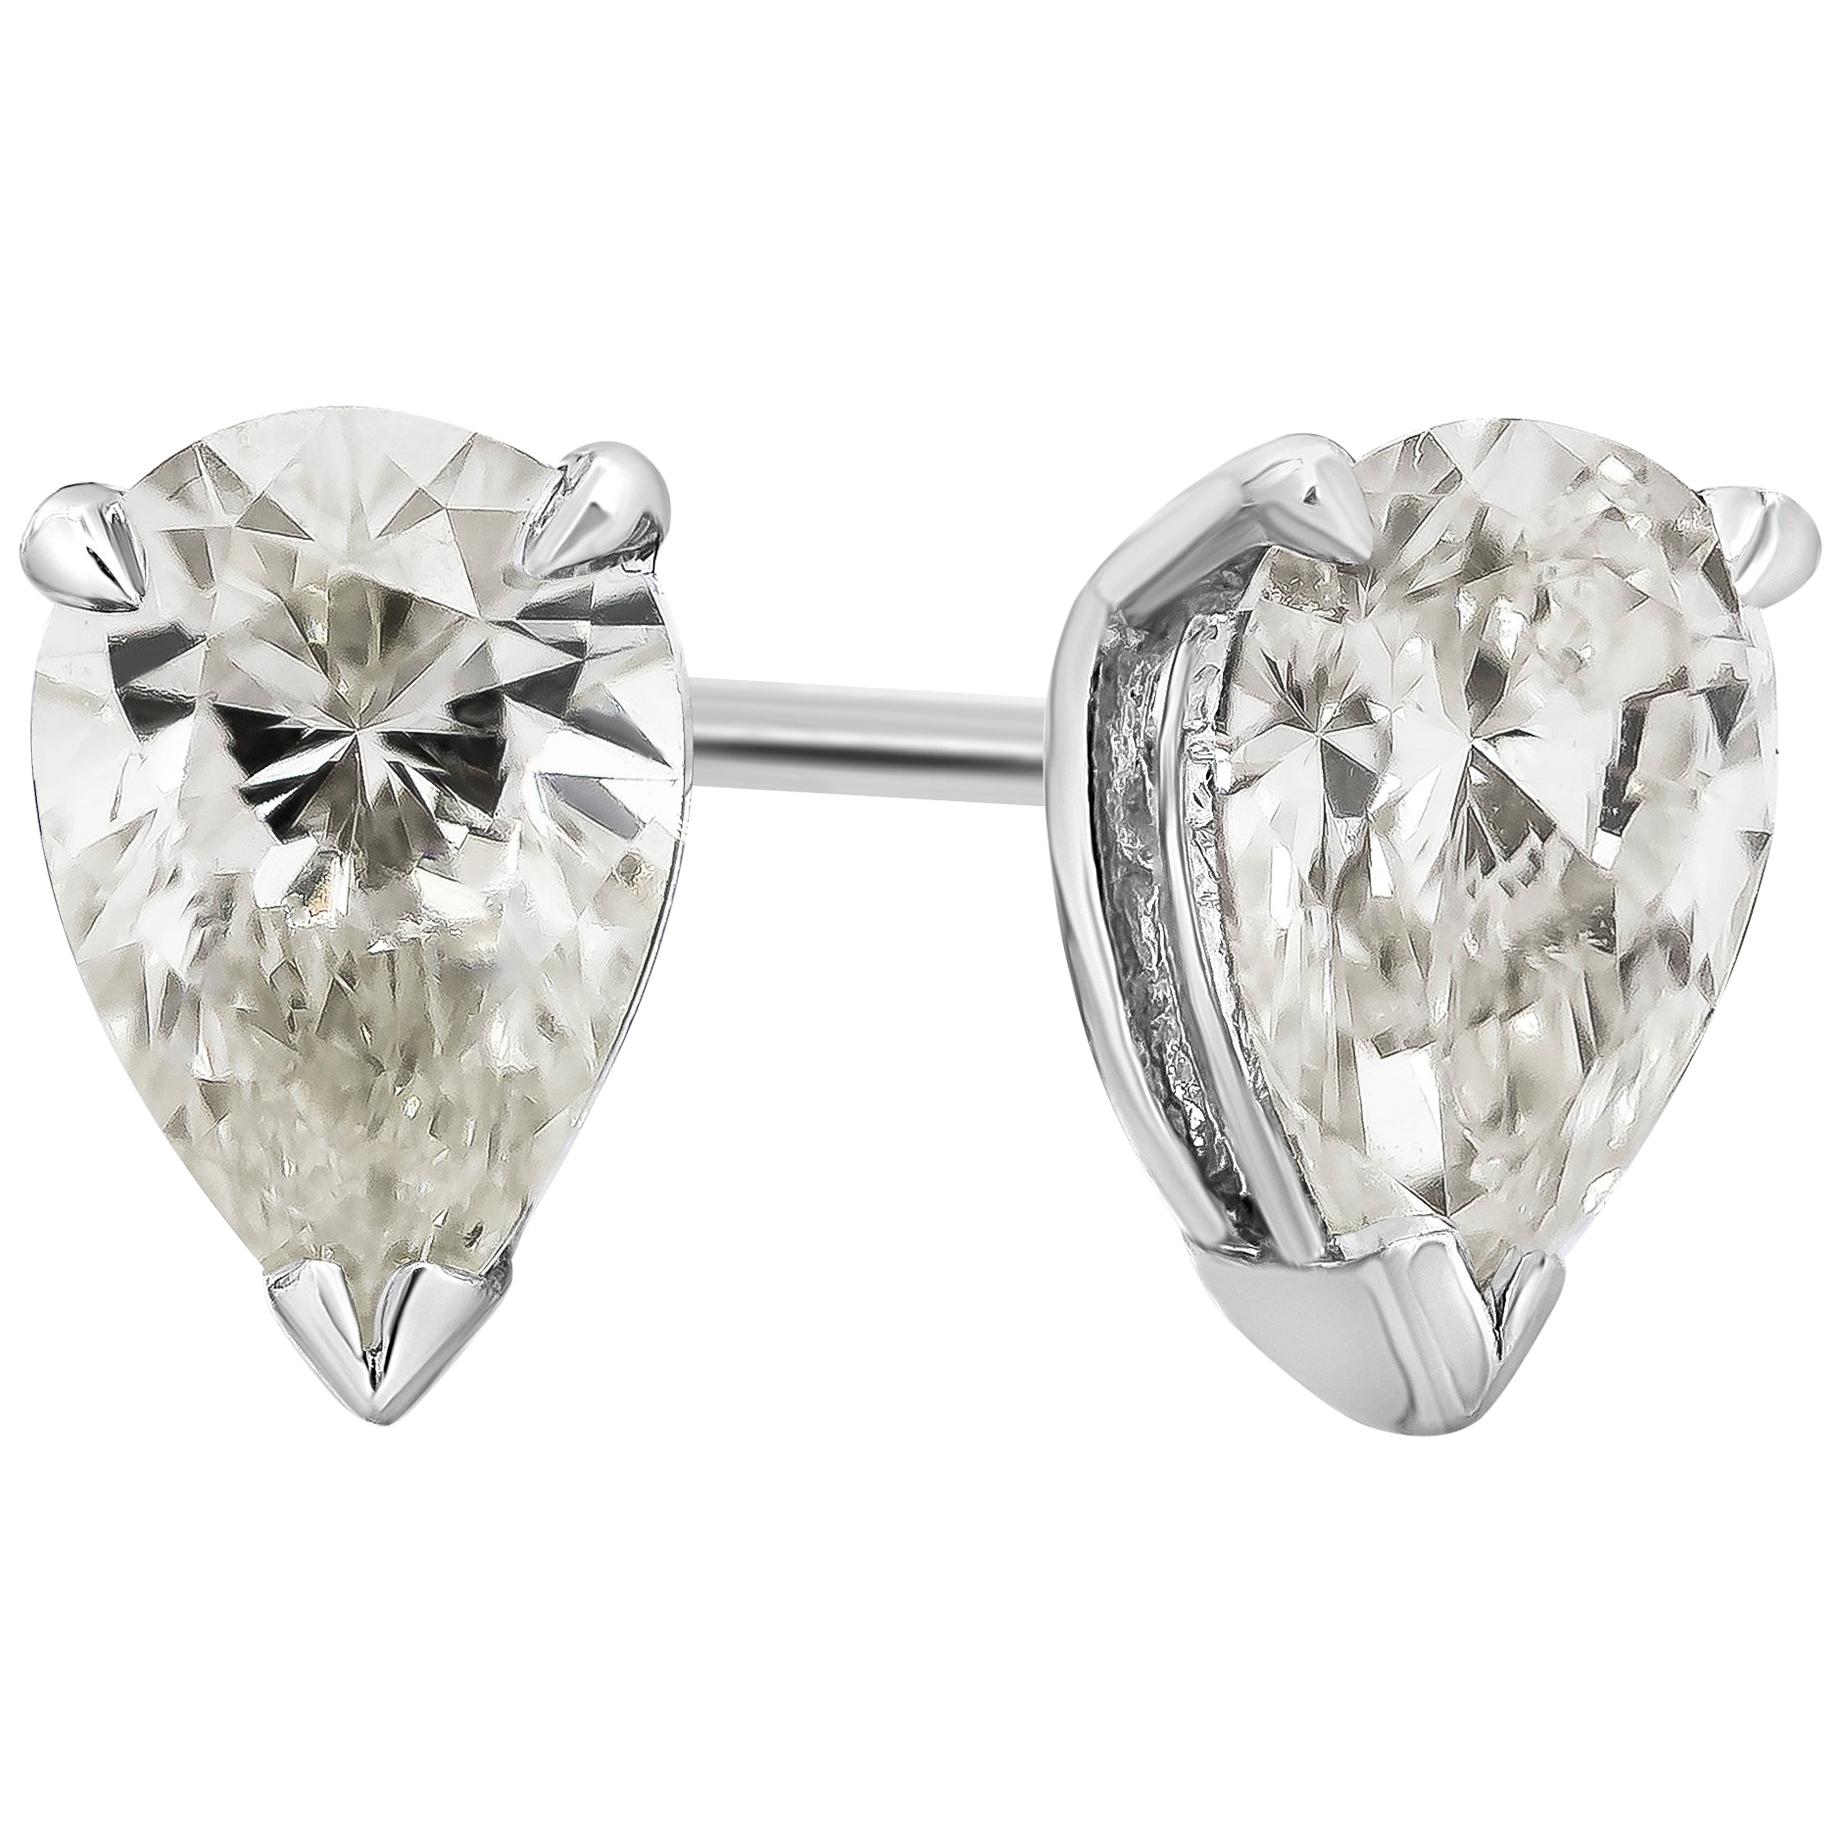 Roman Malakov 1.03 Carats Total Pear Shape Diamond Stud Earrings in White Gold For Sale